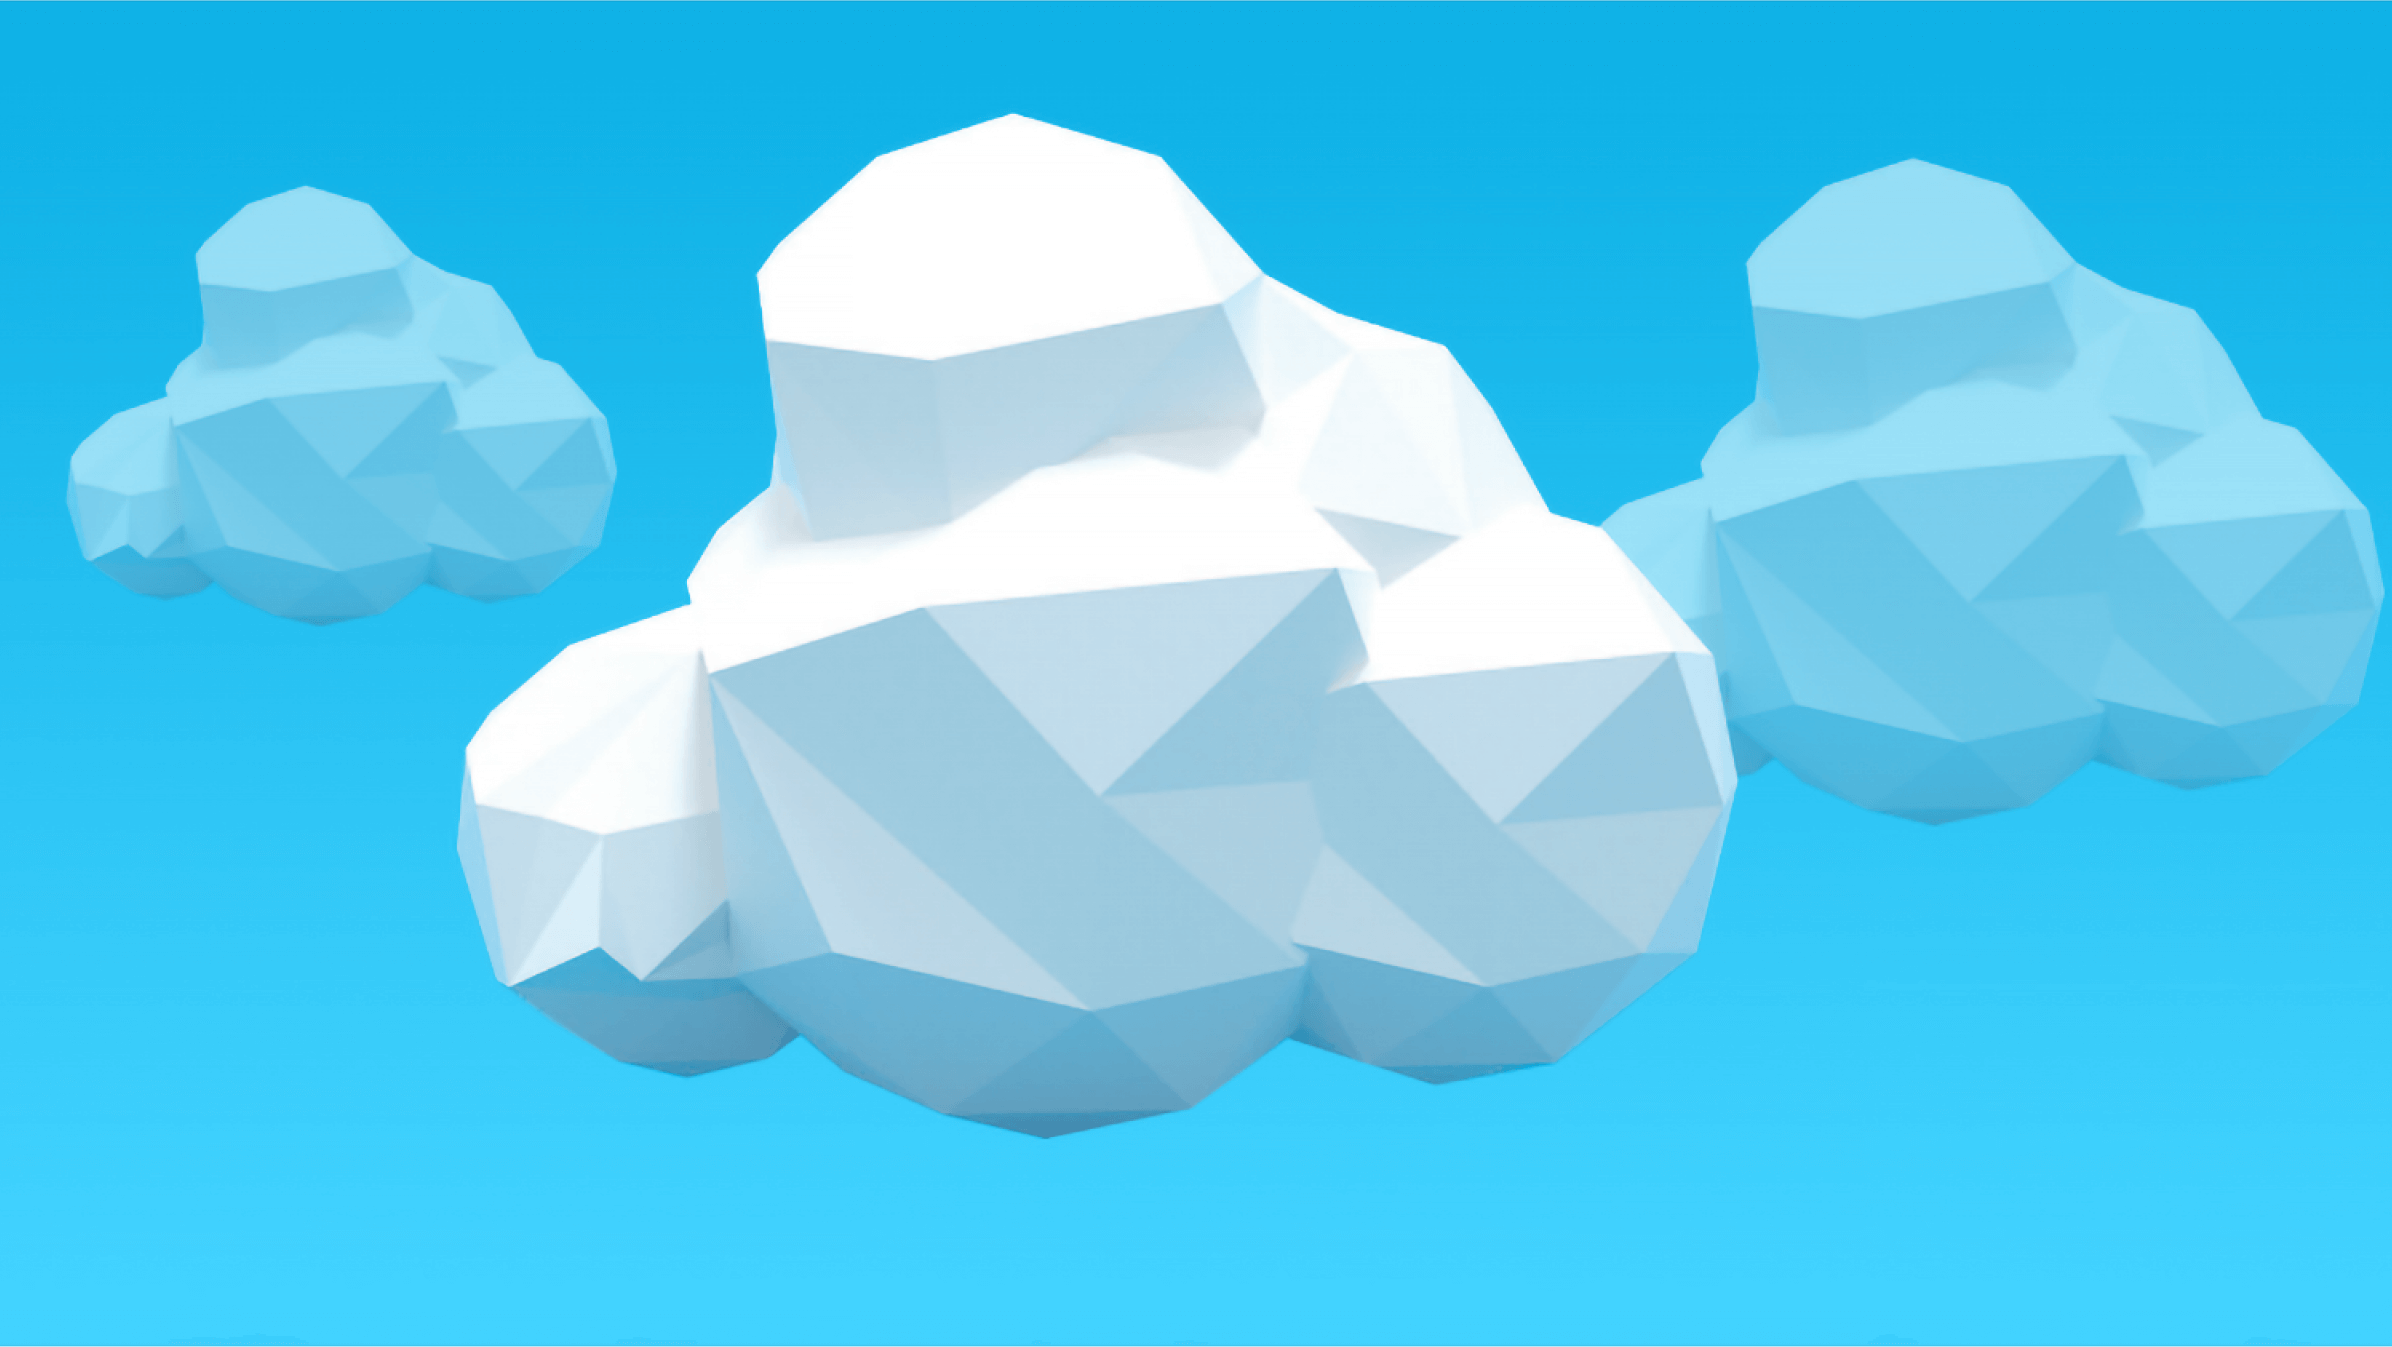 Three puffy white clouds drifting across a blue sky.